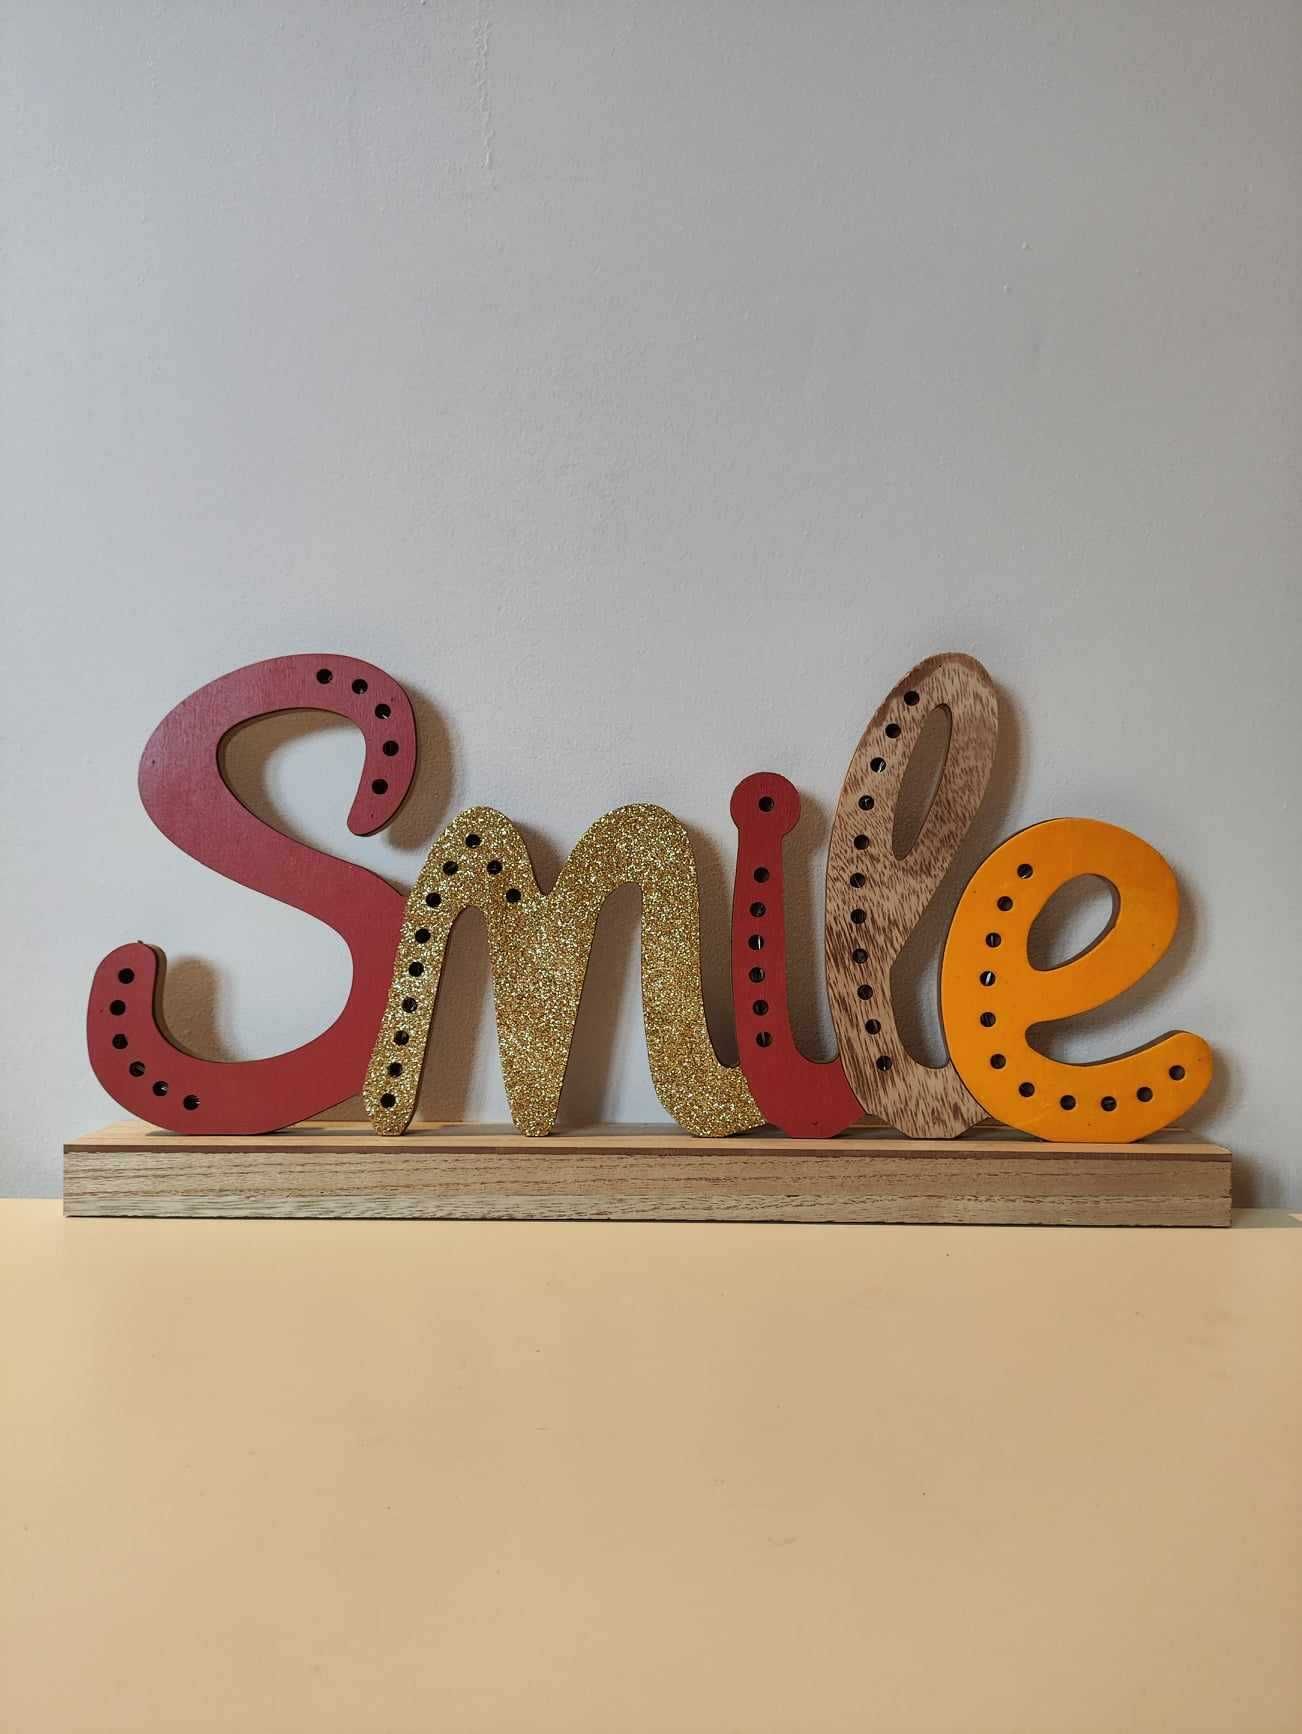 Dekoracyjny napis "Smile"